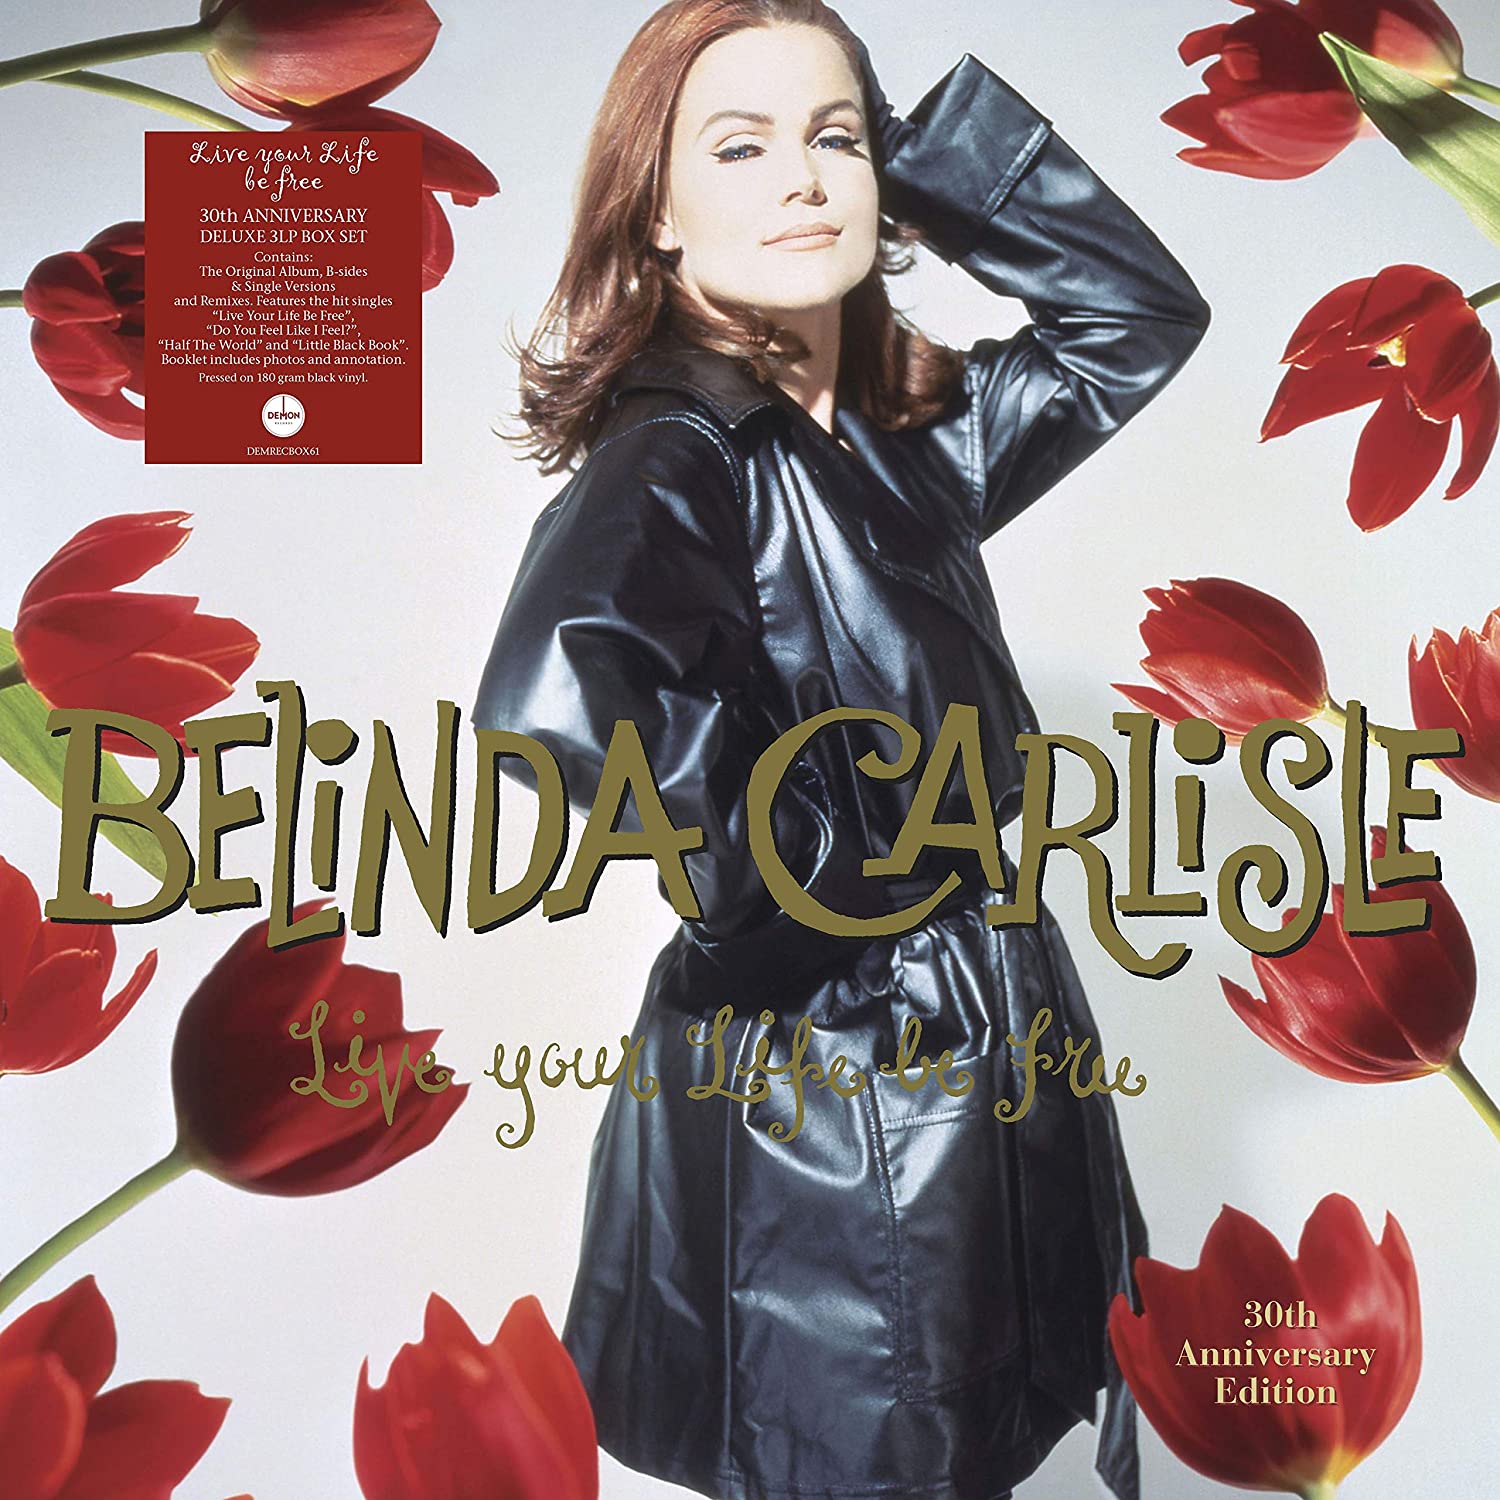 BELINDA CARLISLE - Live Your Life Be Free (35th Anniv. Ed.) - 3LP - Deluxe 180g Vinyl Boxset